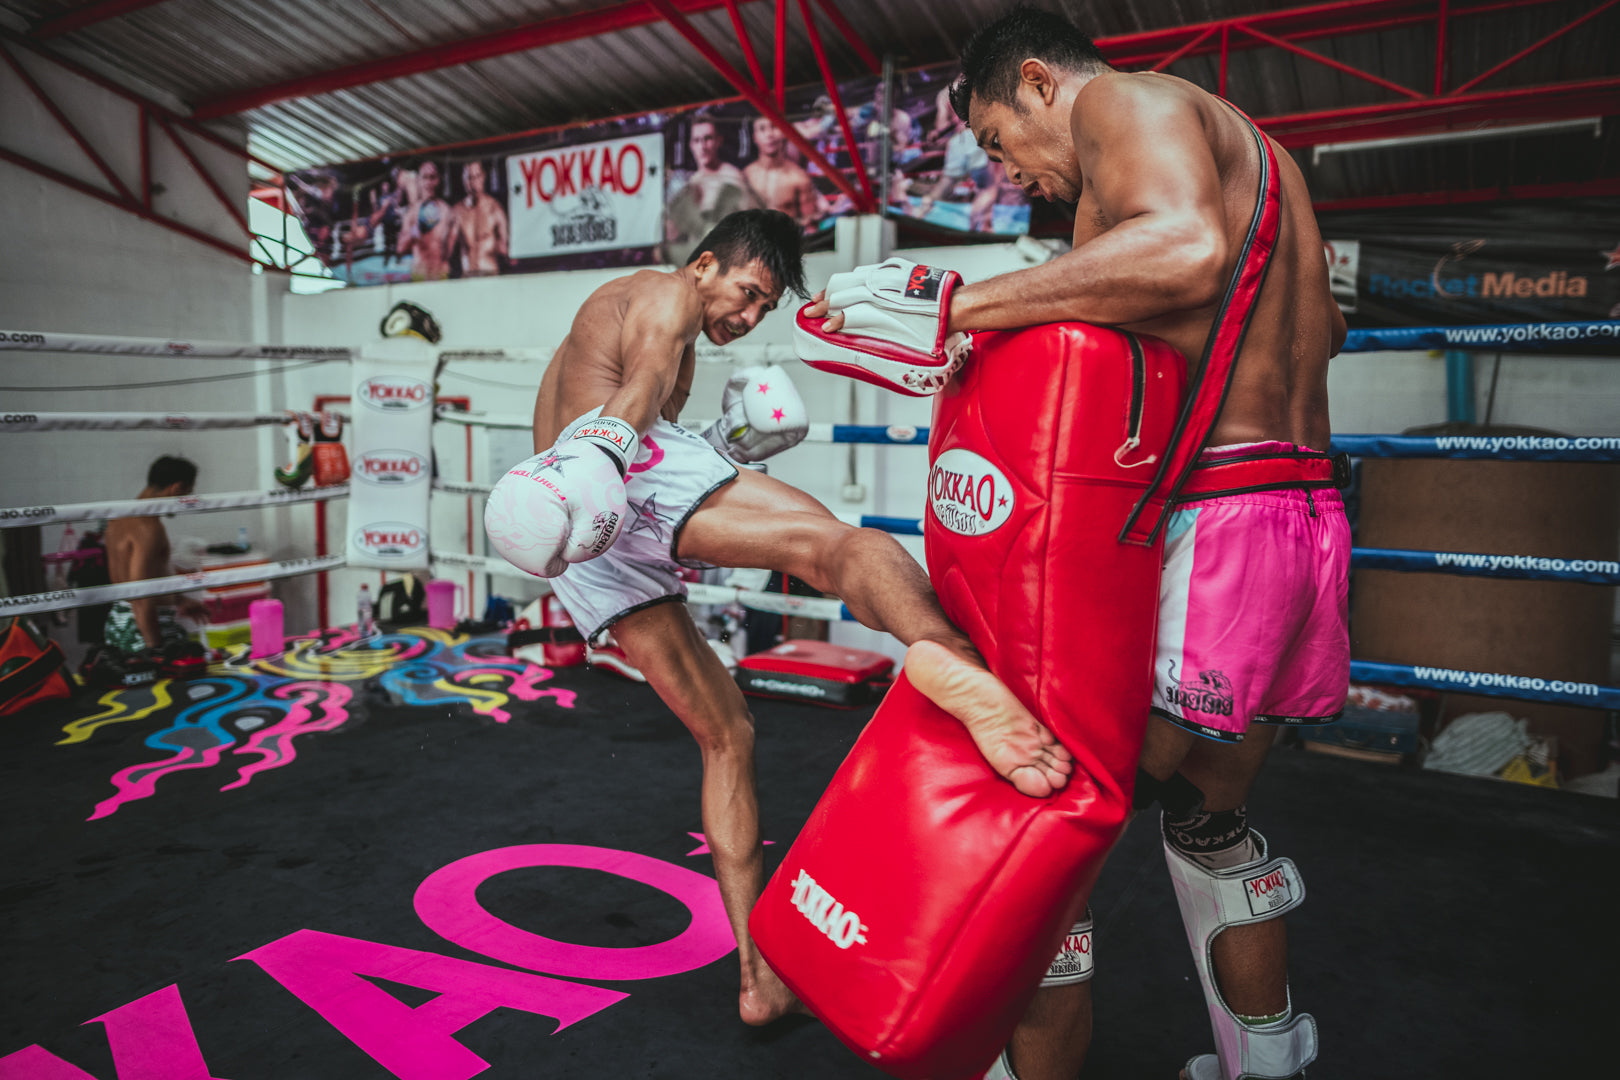 Tibiales Dragons Pro Special Muay Thai Mma Kick Boxing